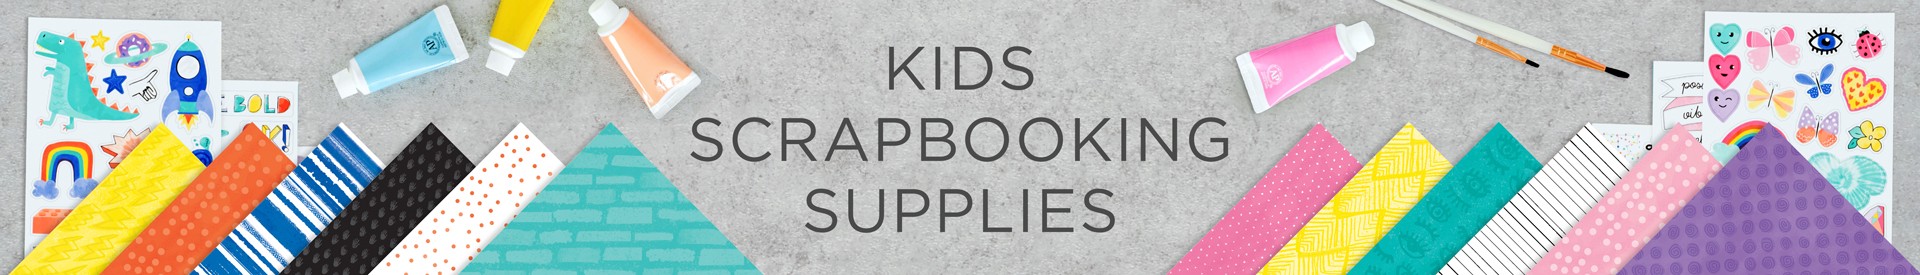 Kids Scrapbooking Supplies